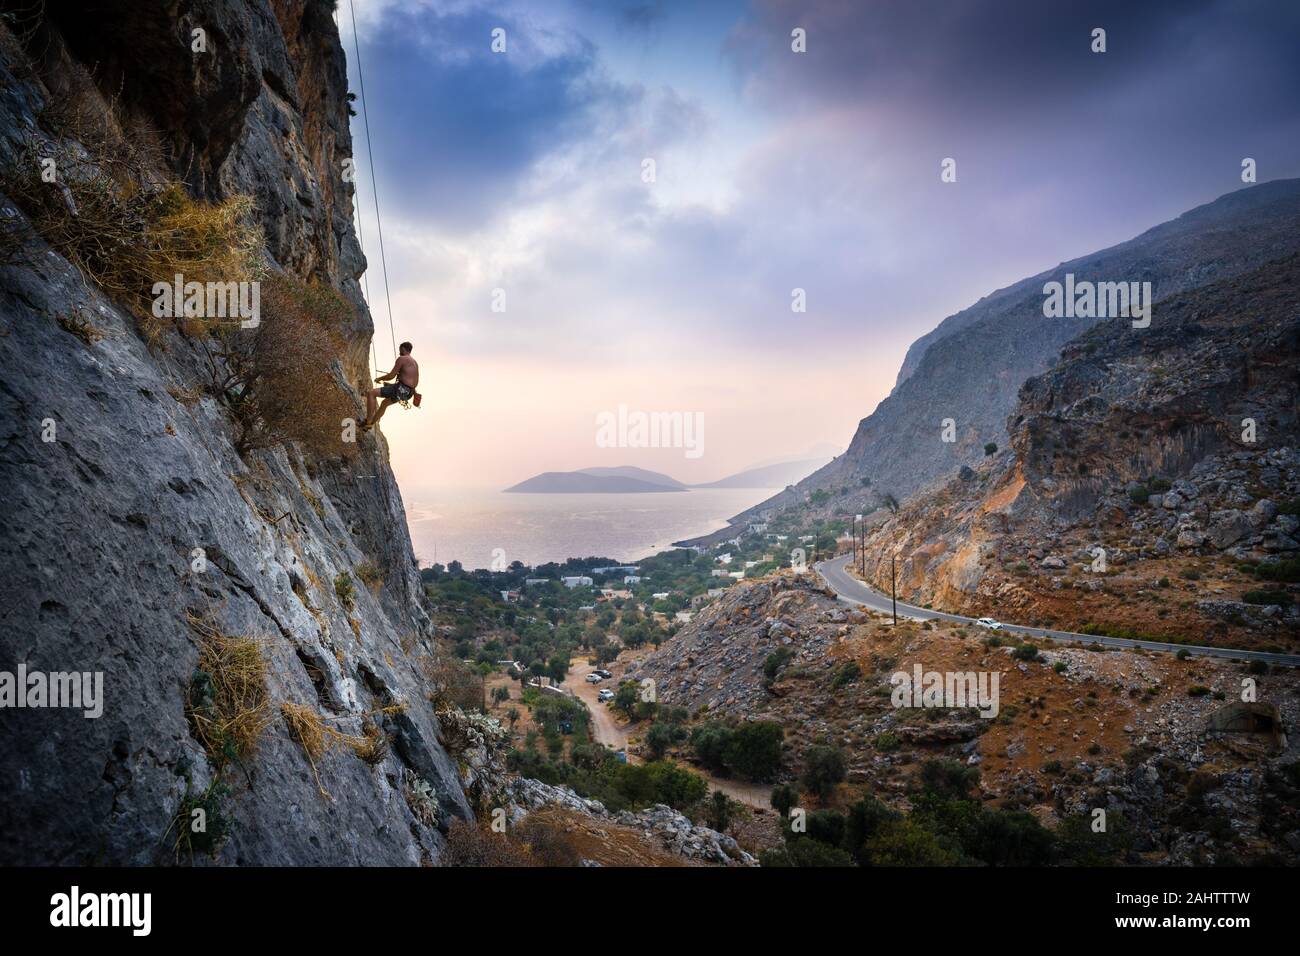 Beautiful Sunset Landscape With Man Lowering Off A Hard Rock Climb On Kalymnos Island, Greece. Stock Photo